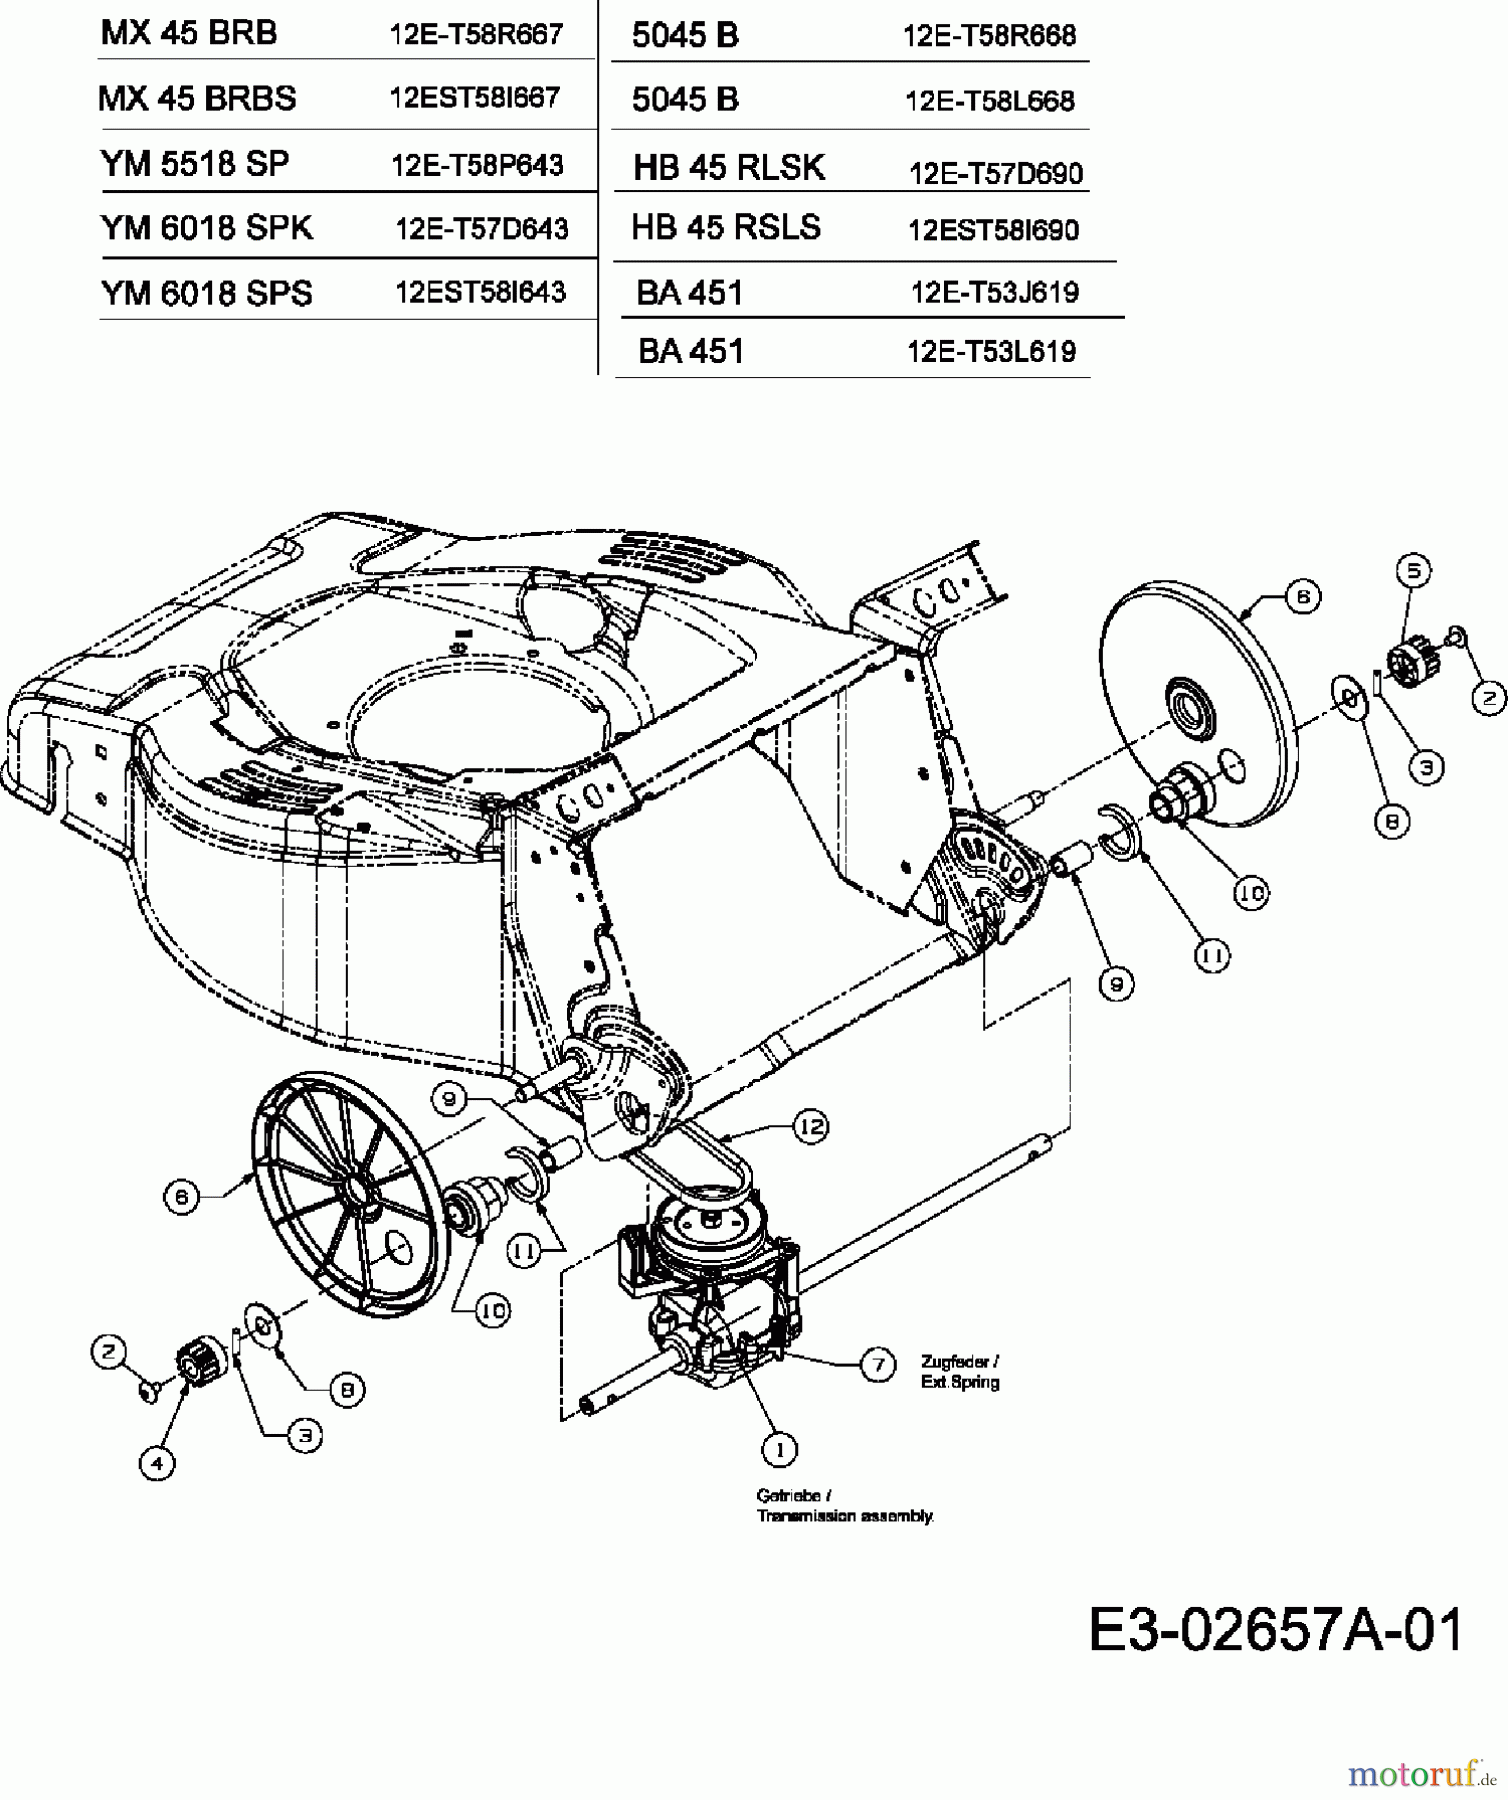  Merox Petrol mower self propelled MX 45 BRB 12E-T58R667  (2006) Gearbox 618-04364